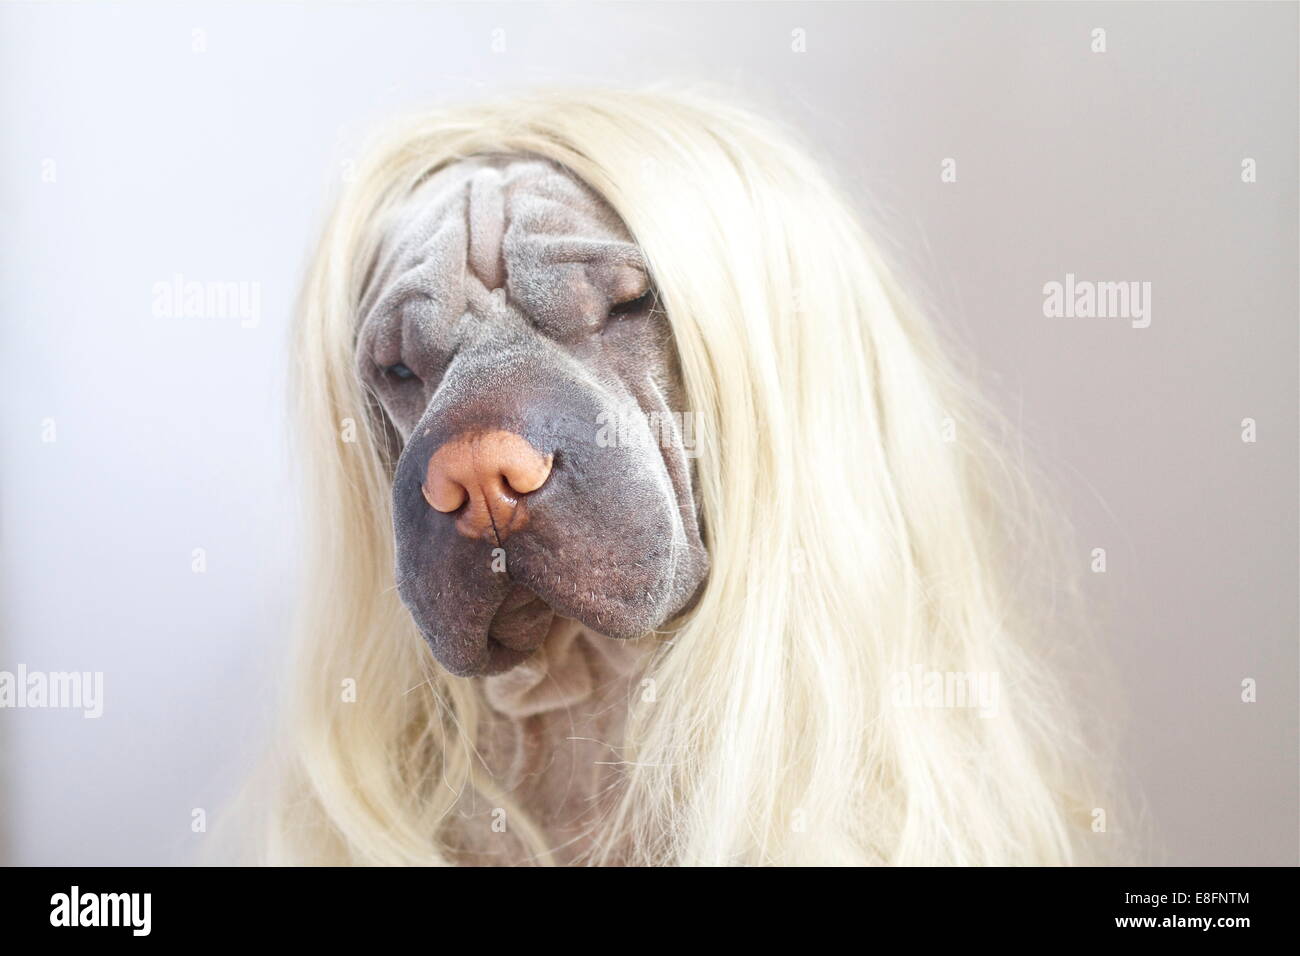 Shar pei dog wearing a long blonde wig Stock Photo